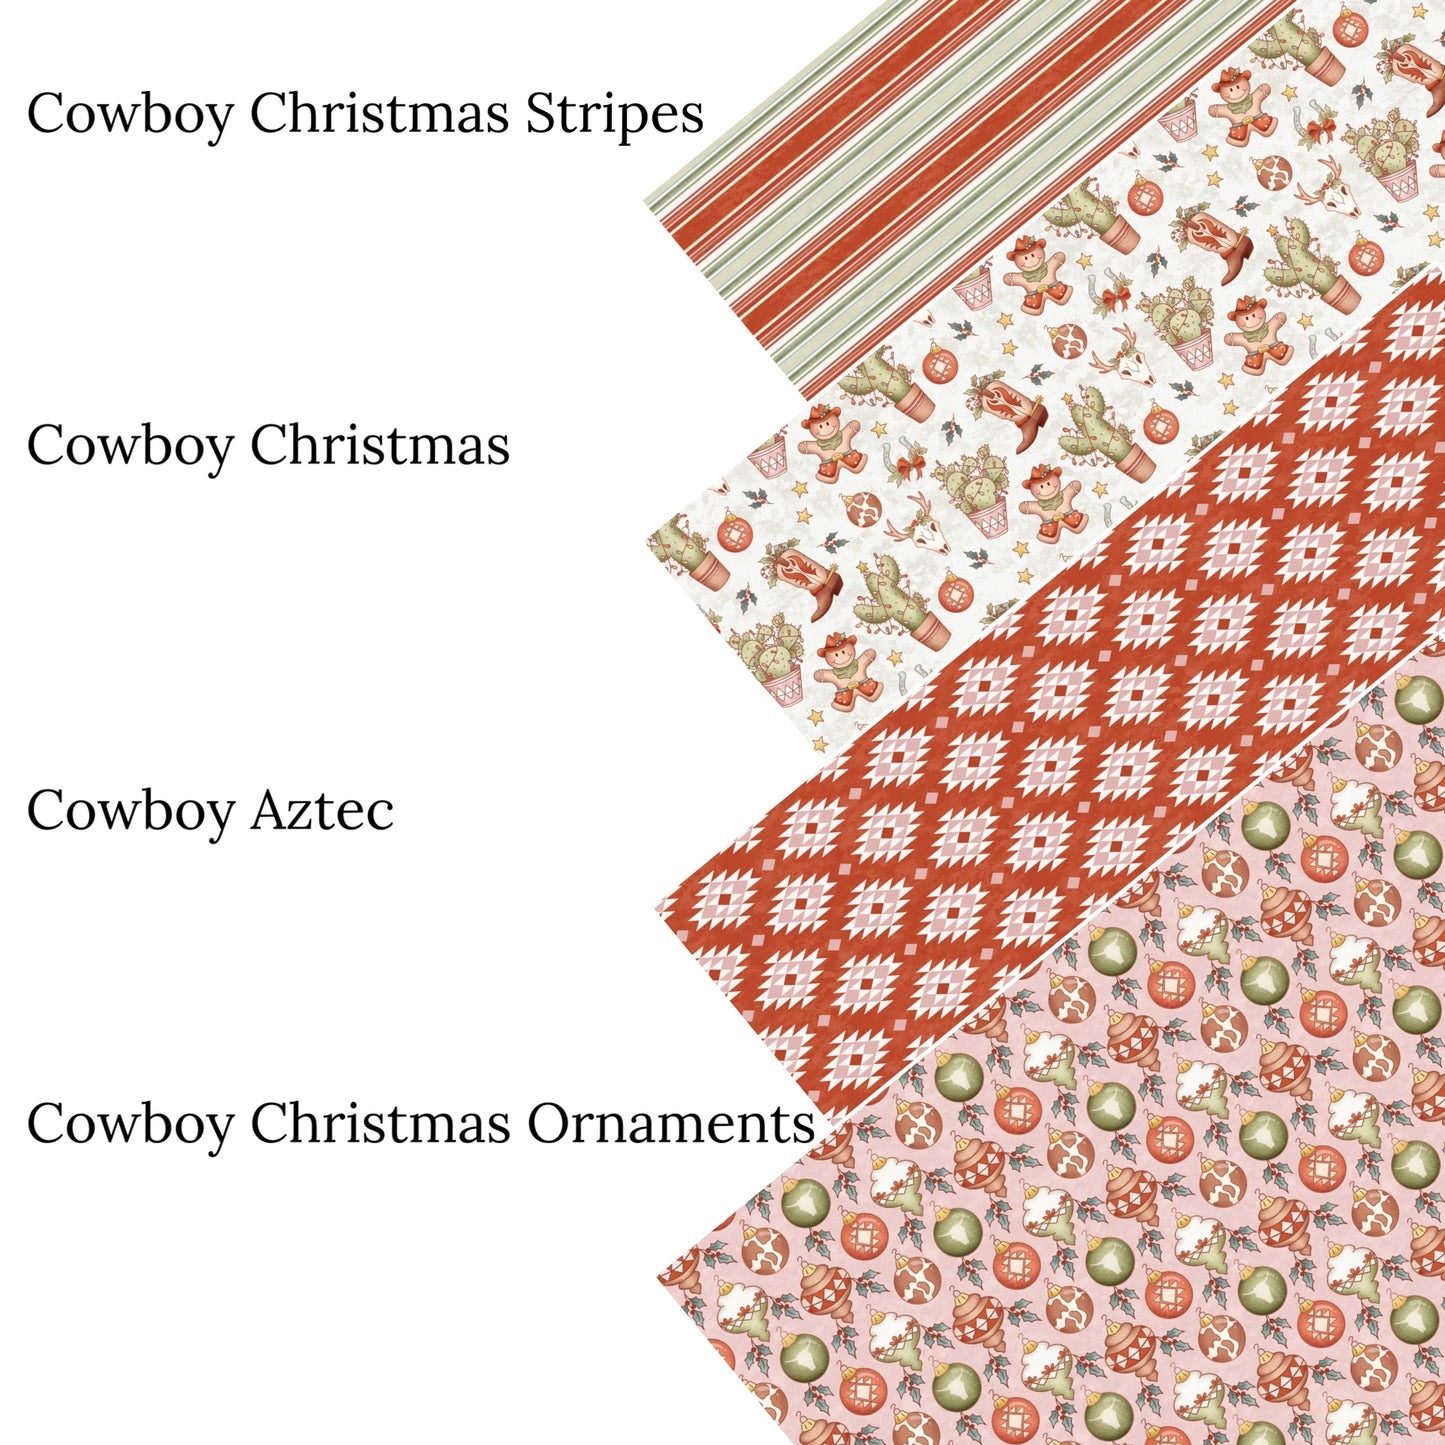 Cowboy Christmas Ornaments Faux Leather Sheets